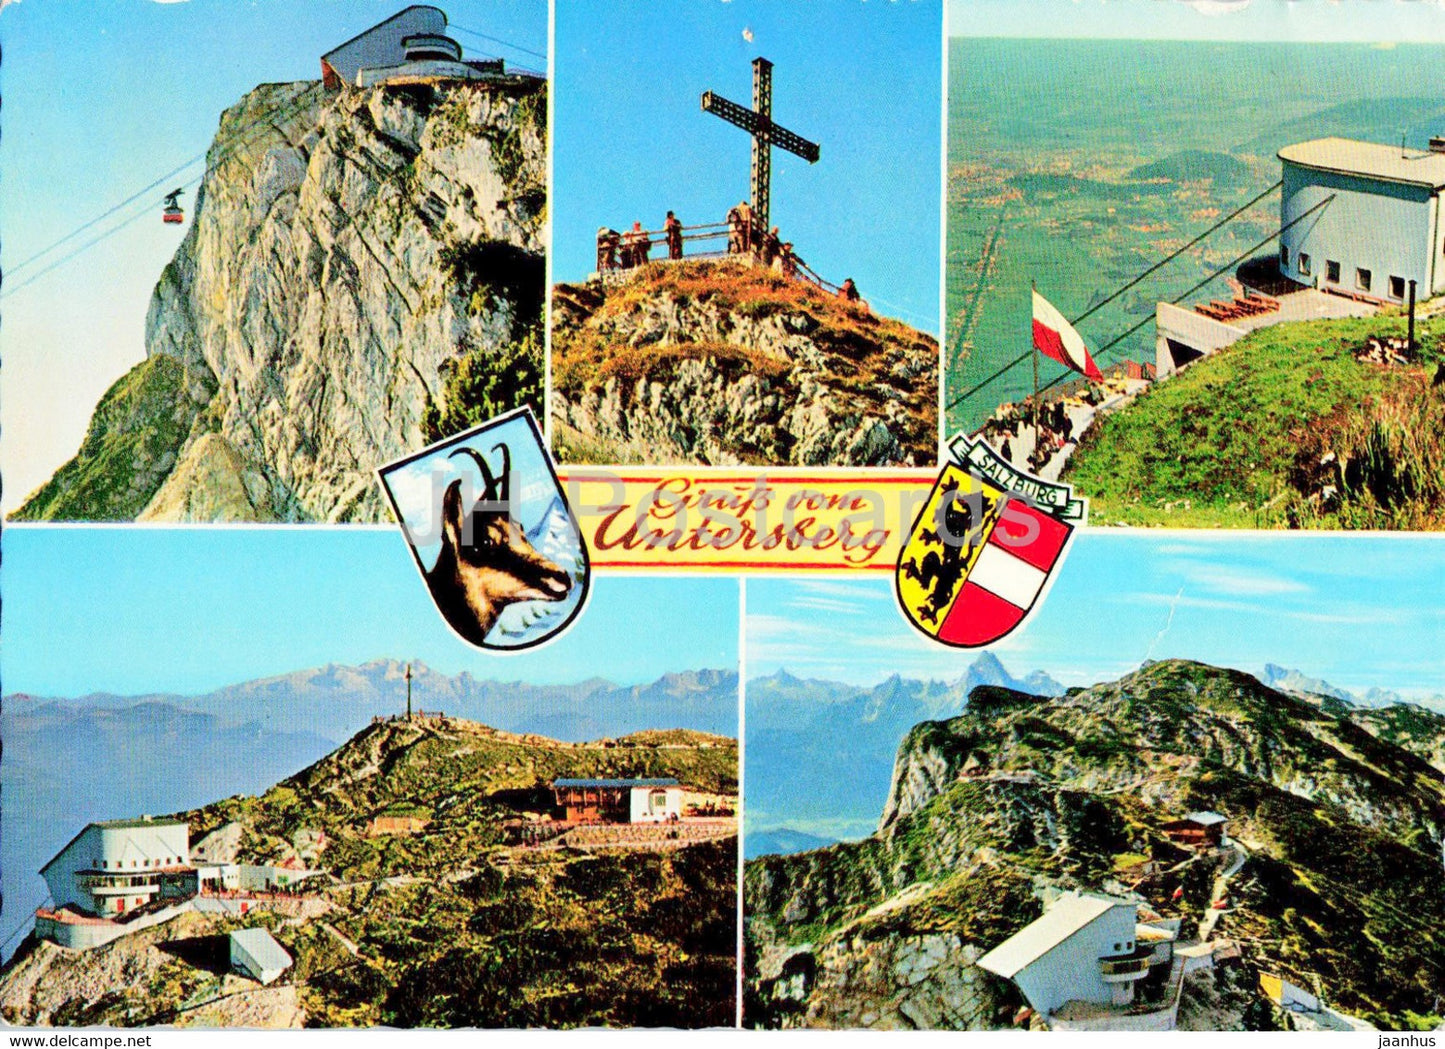 Gruss vom Untersberg - Austria - unused - JH Postcards